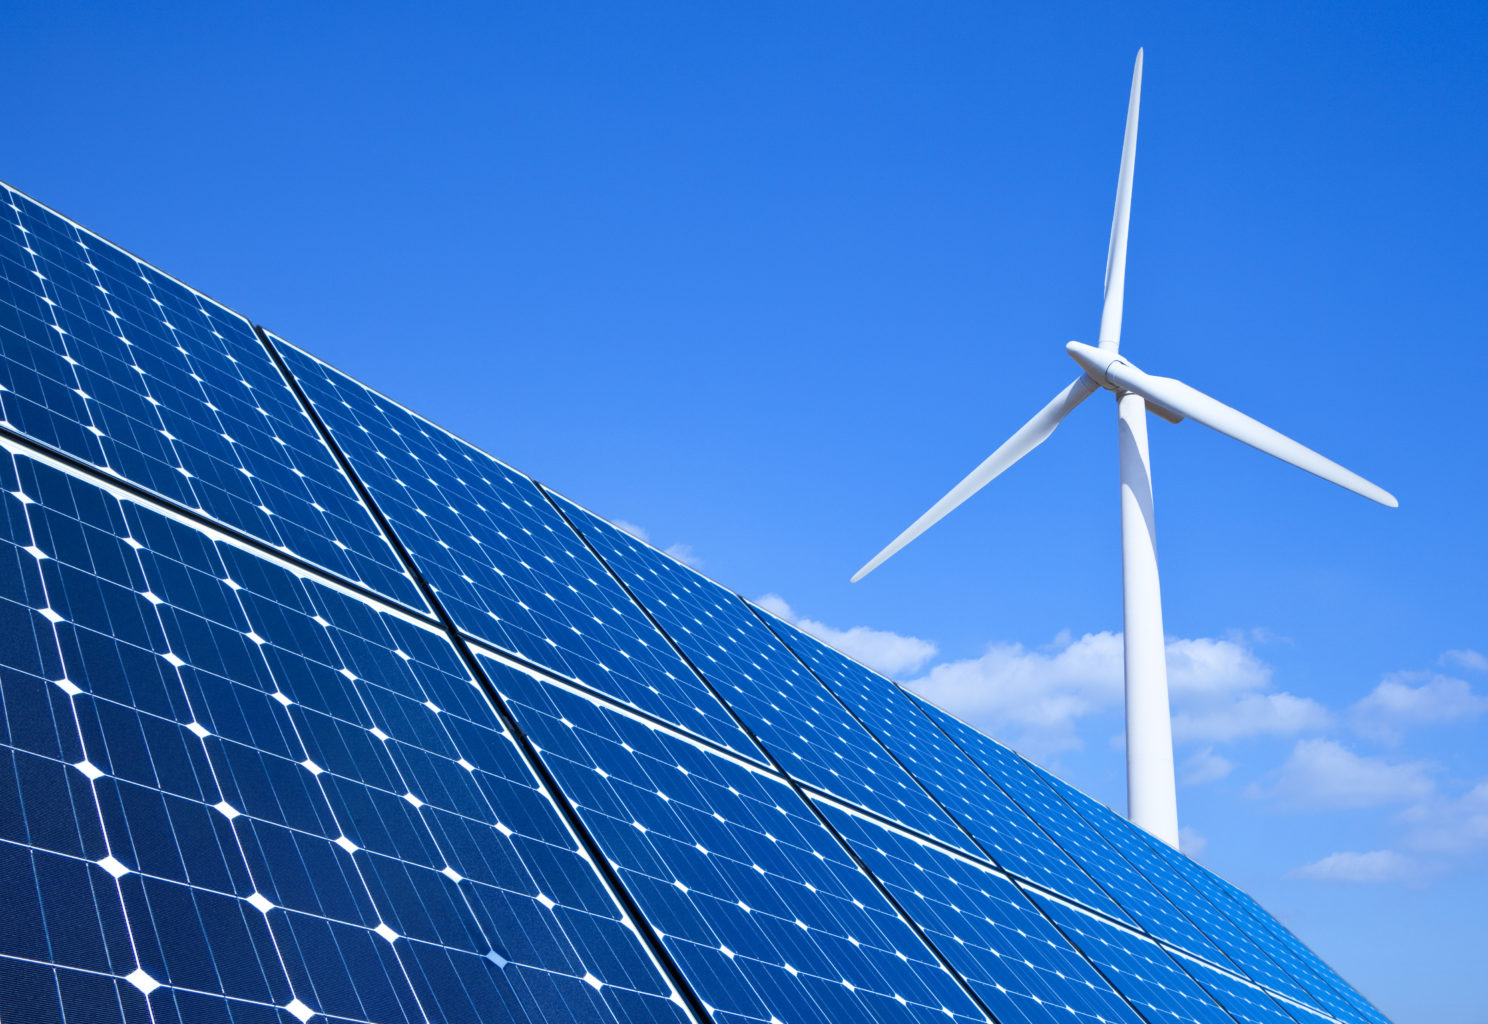 Clean, Renewable Energy: Wind, Solar, Hydro, Biomass